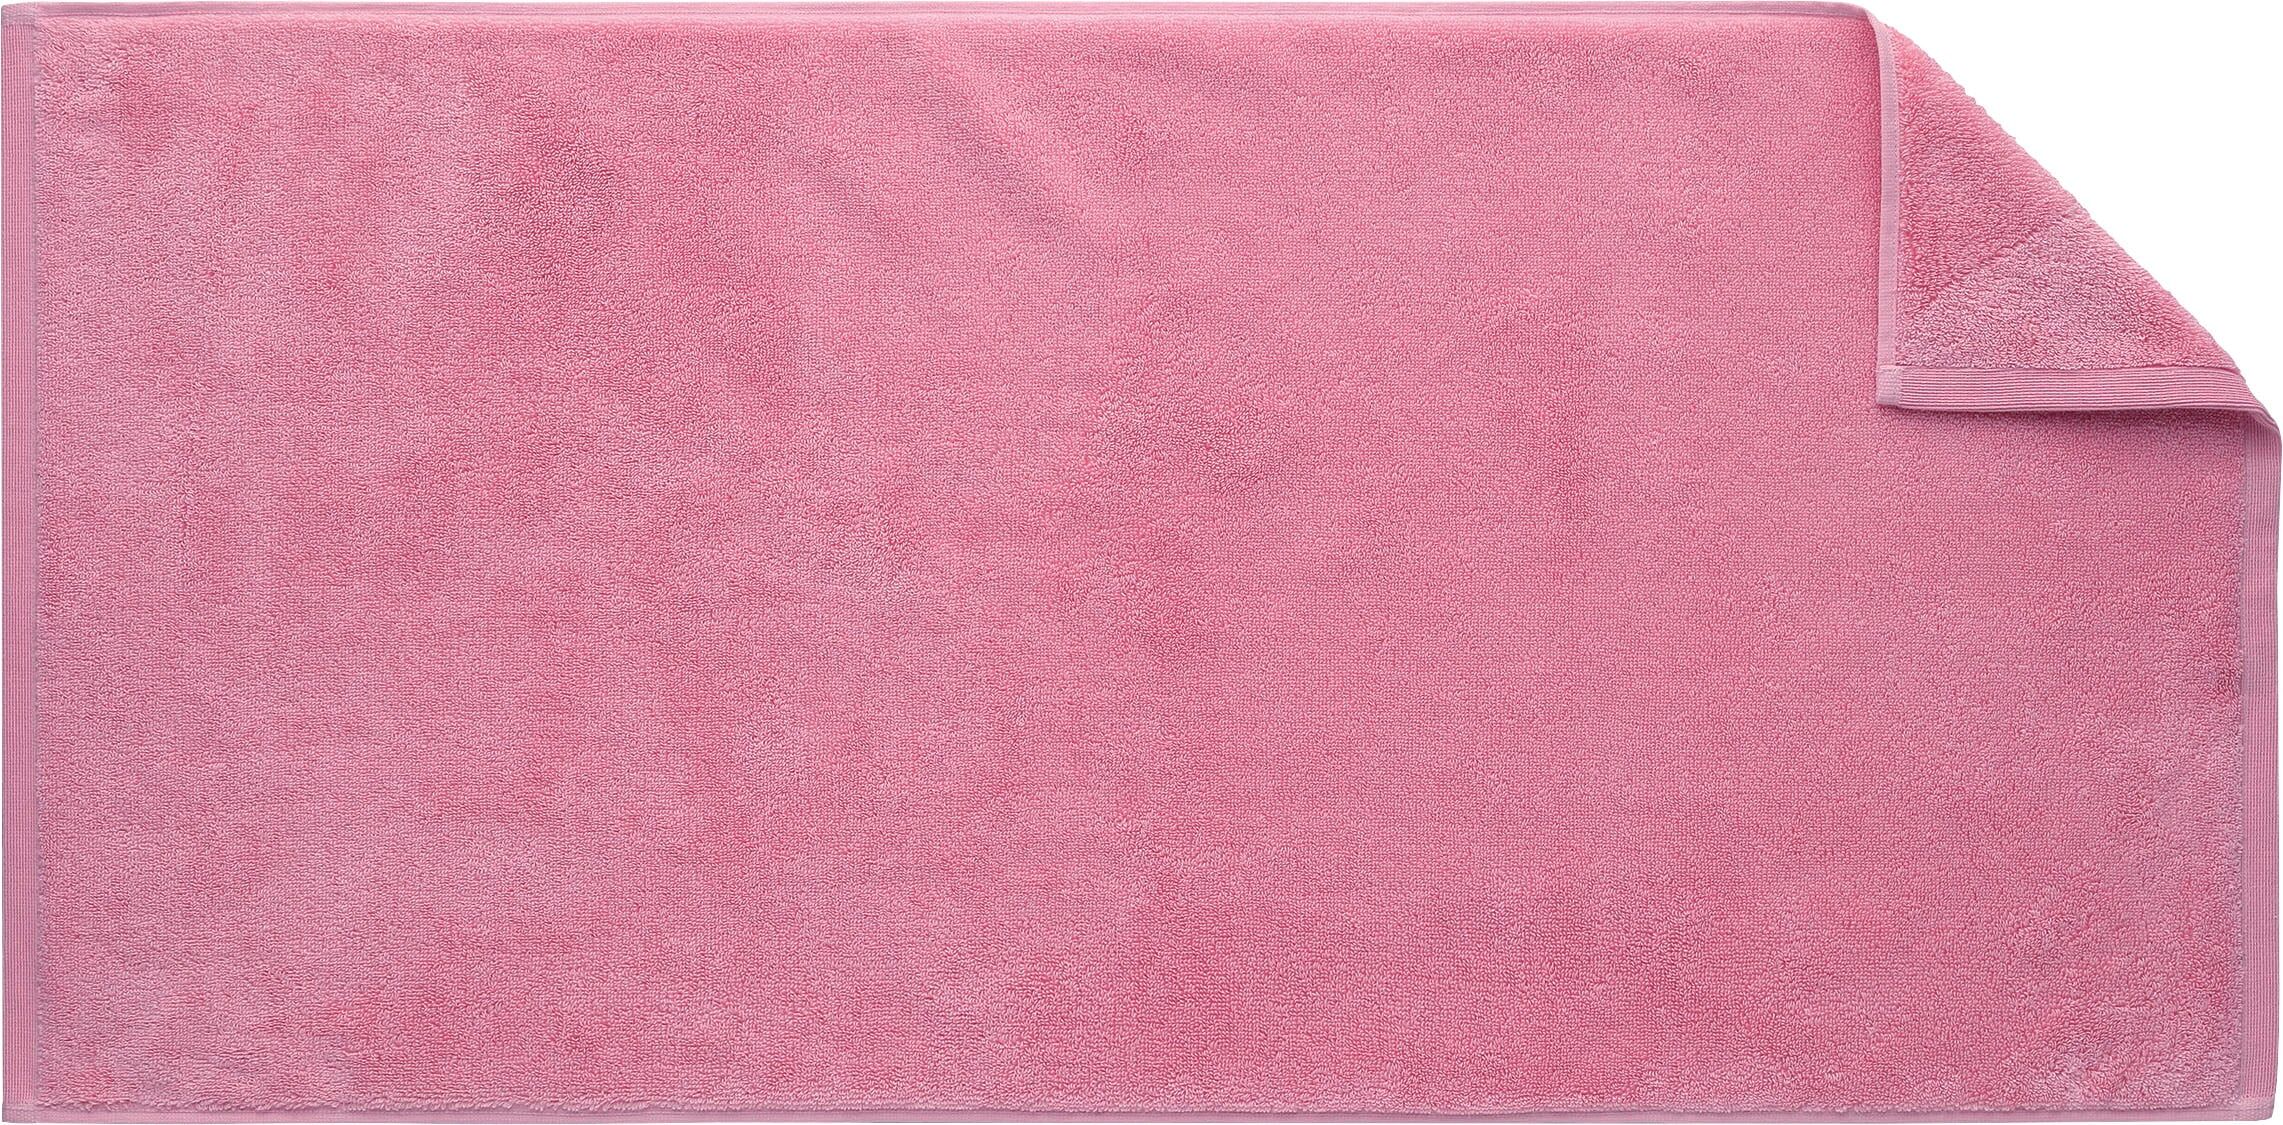 Egeria Handtücher »Elegant«, (2 St.), in schönen Unifarben rosa